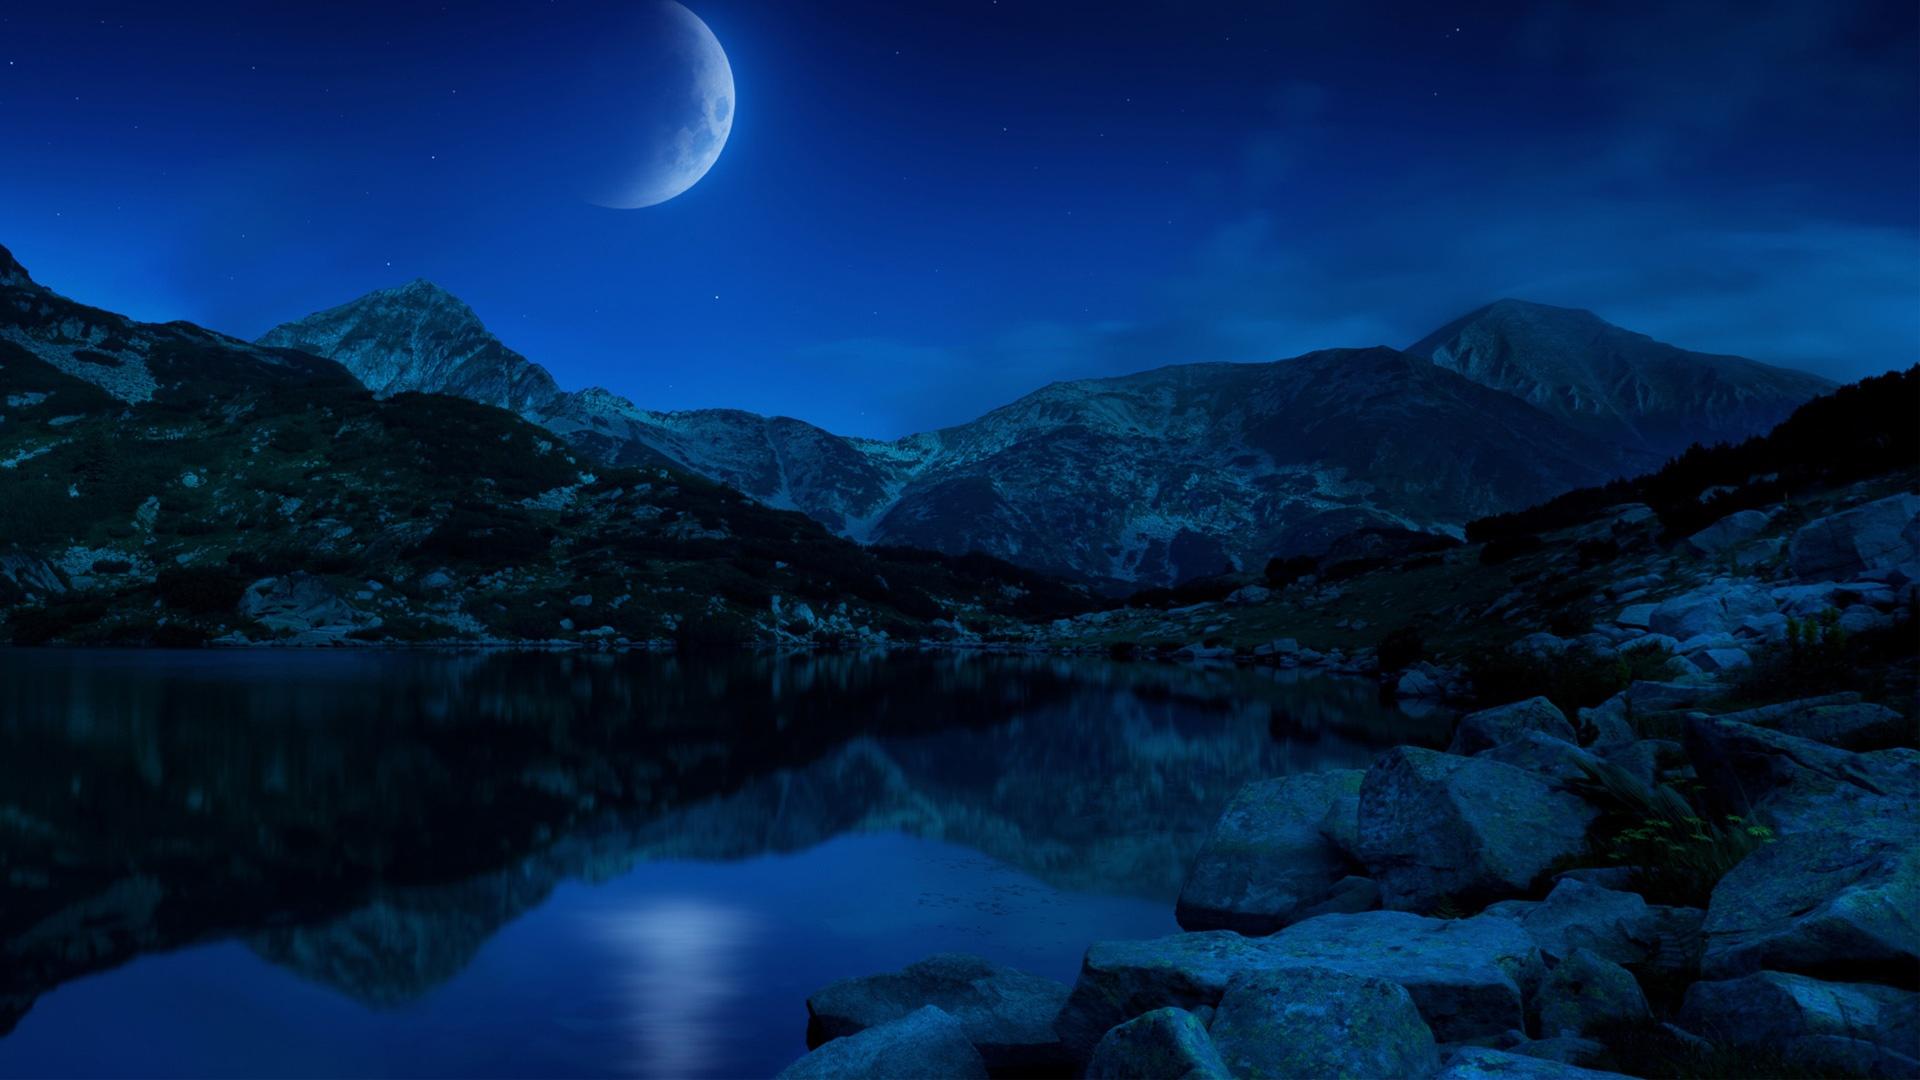 Night Moon Mountain Wallpapers - Top Free Night Moon Mountain ...